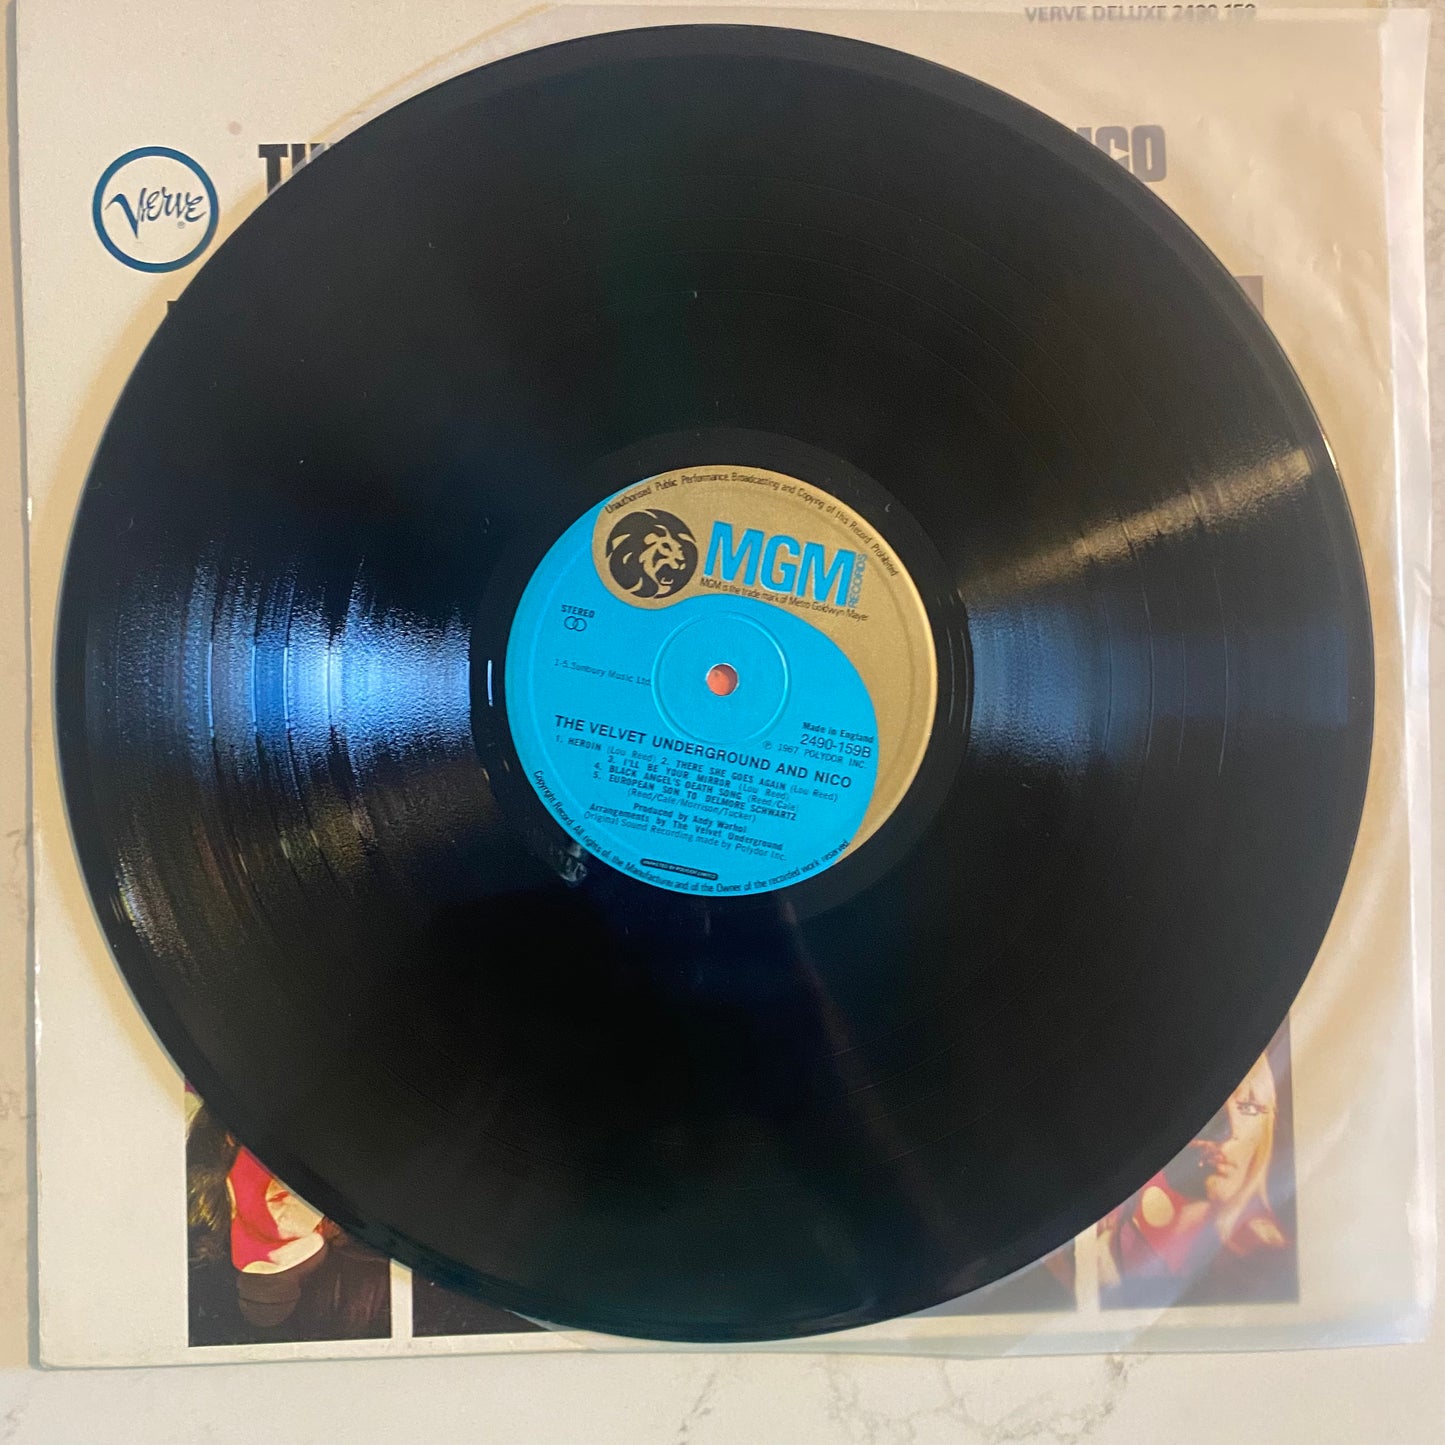 The Velvet Underground & Nico (3) - The Velvet Underground & Nico (LP, Album, RE, Del) (L)